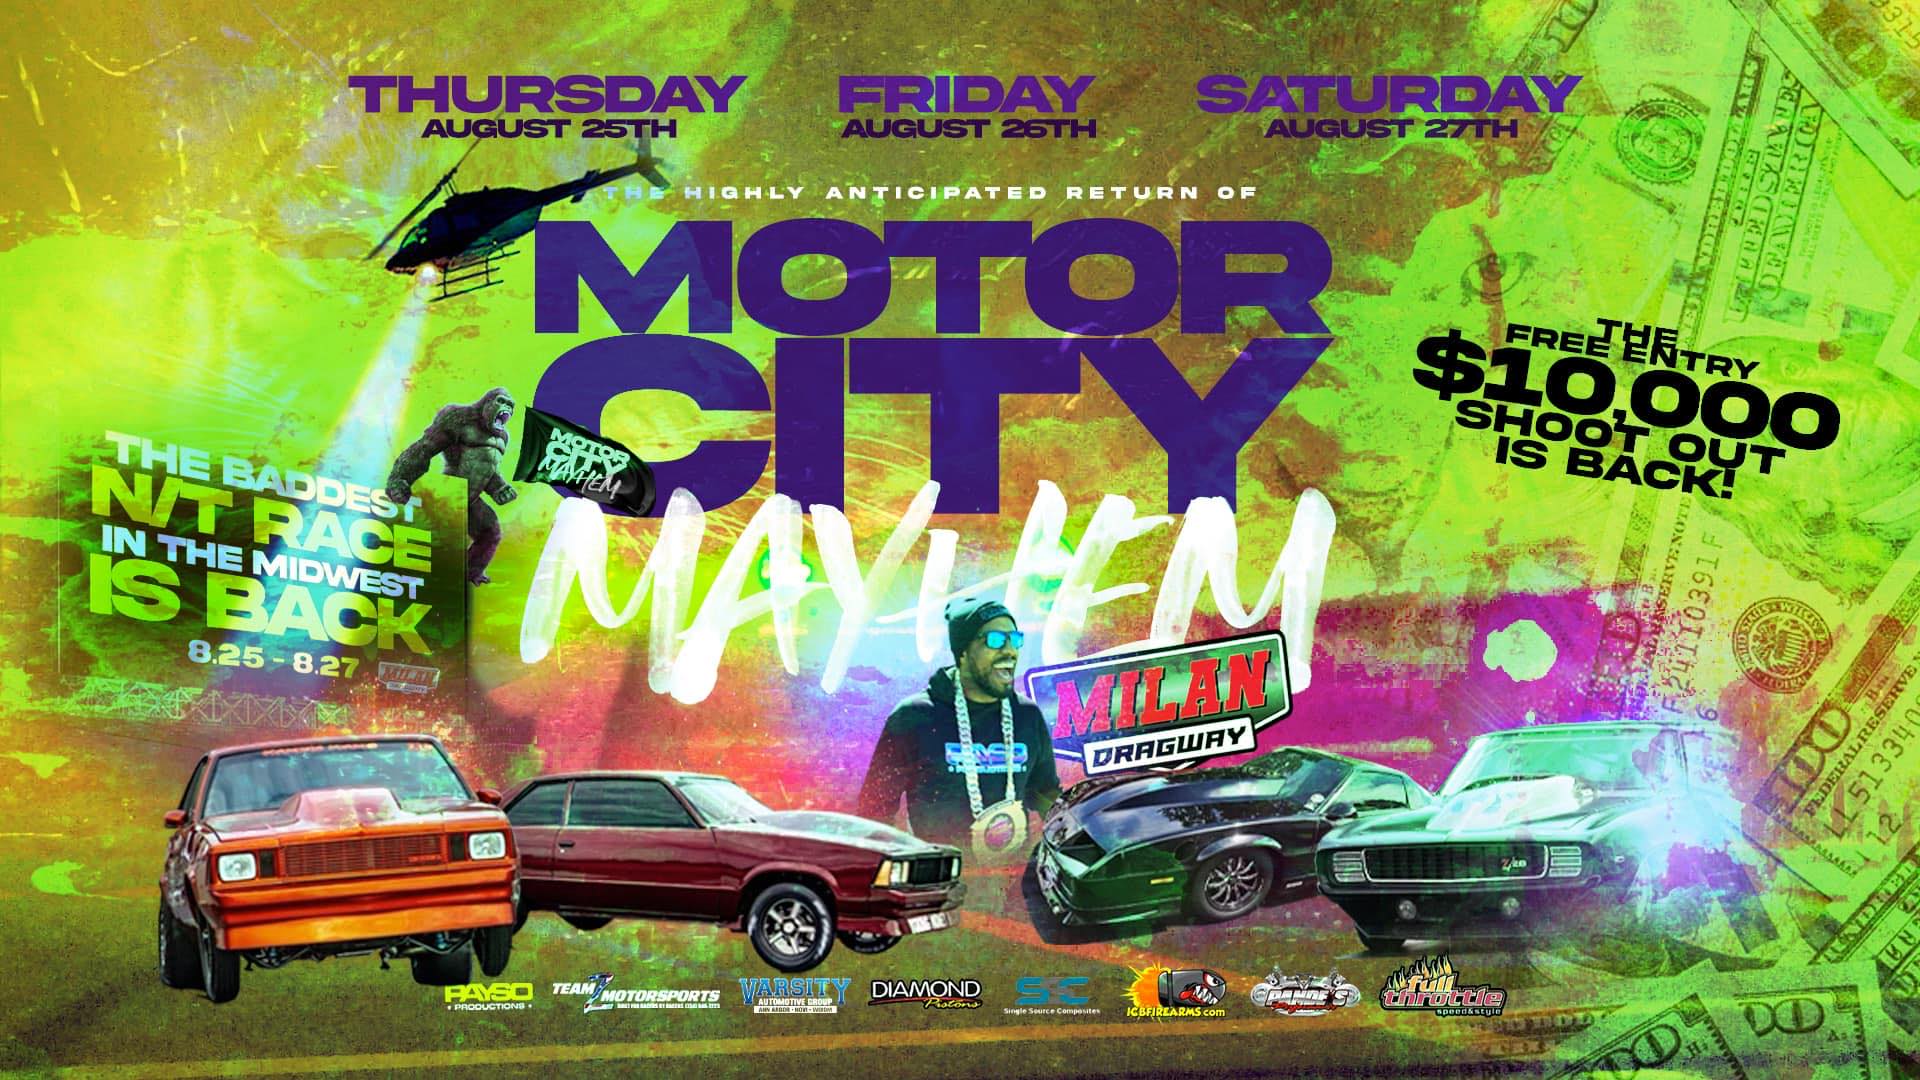 The Return Of Motor City Mayhem